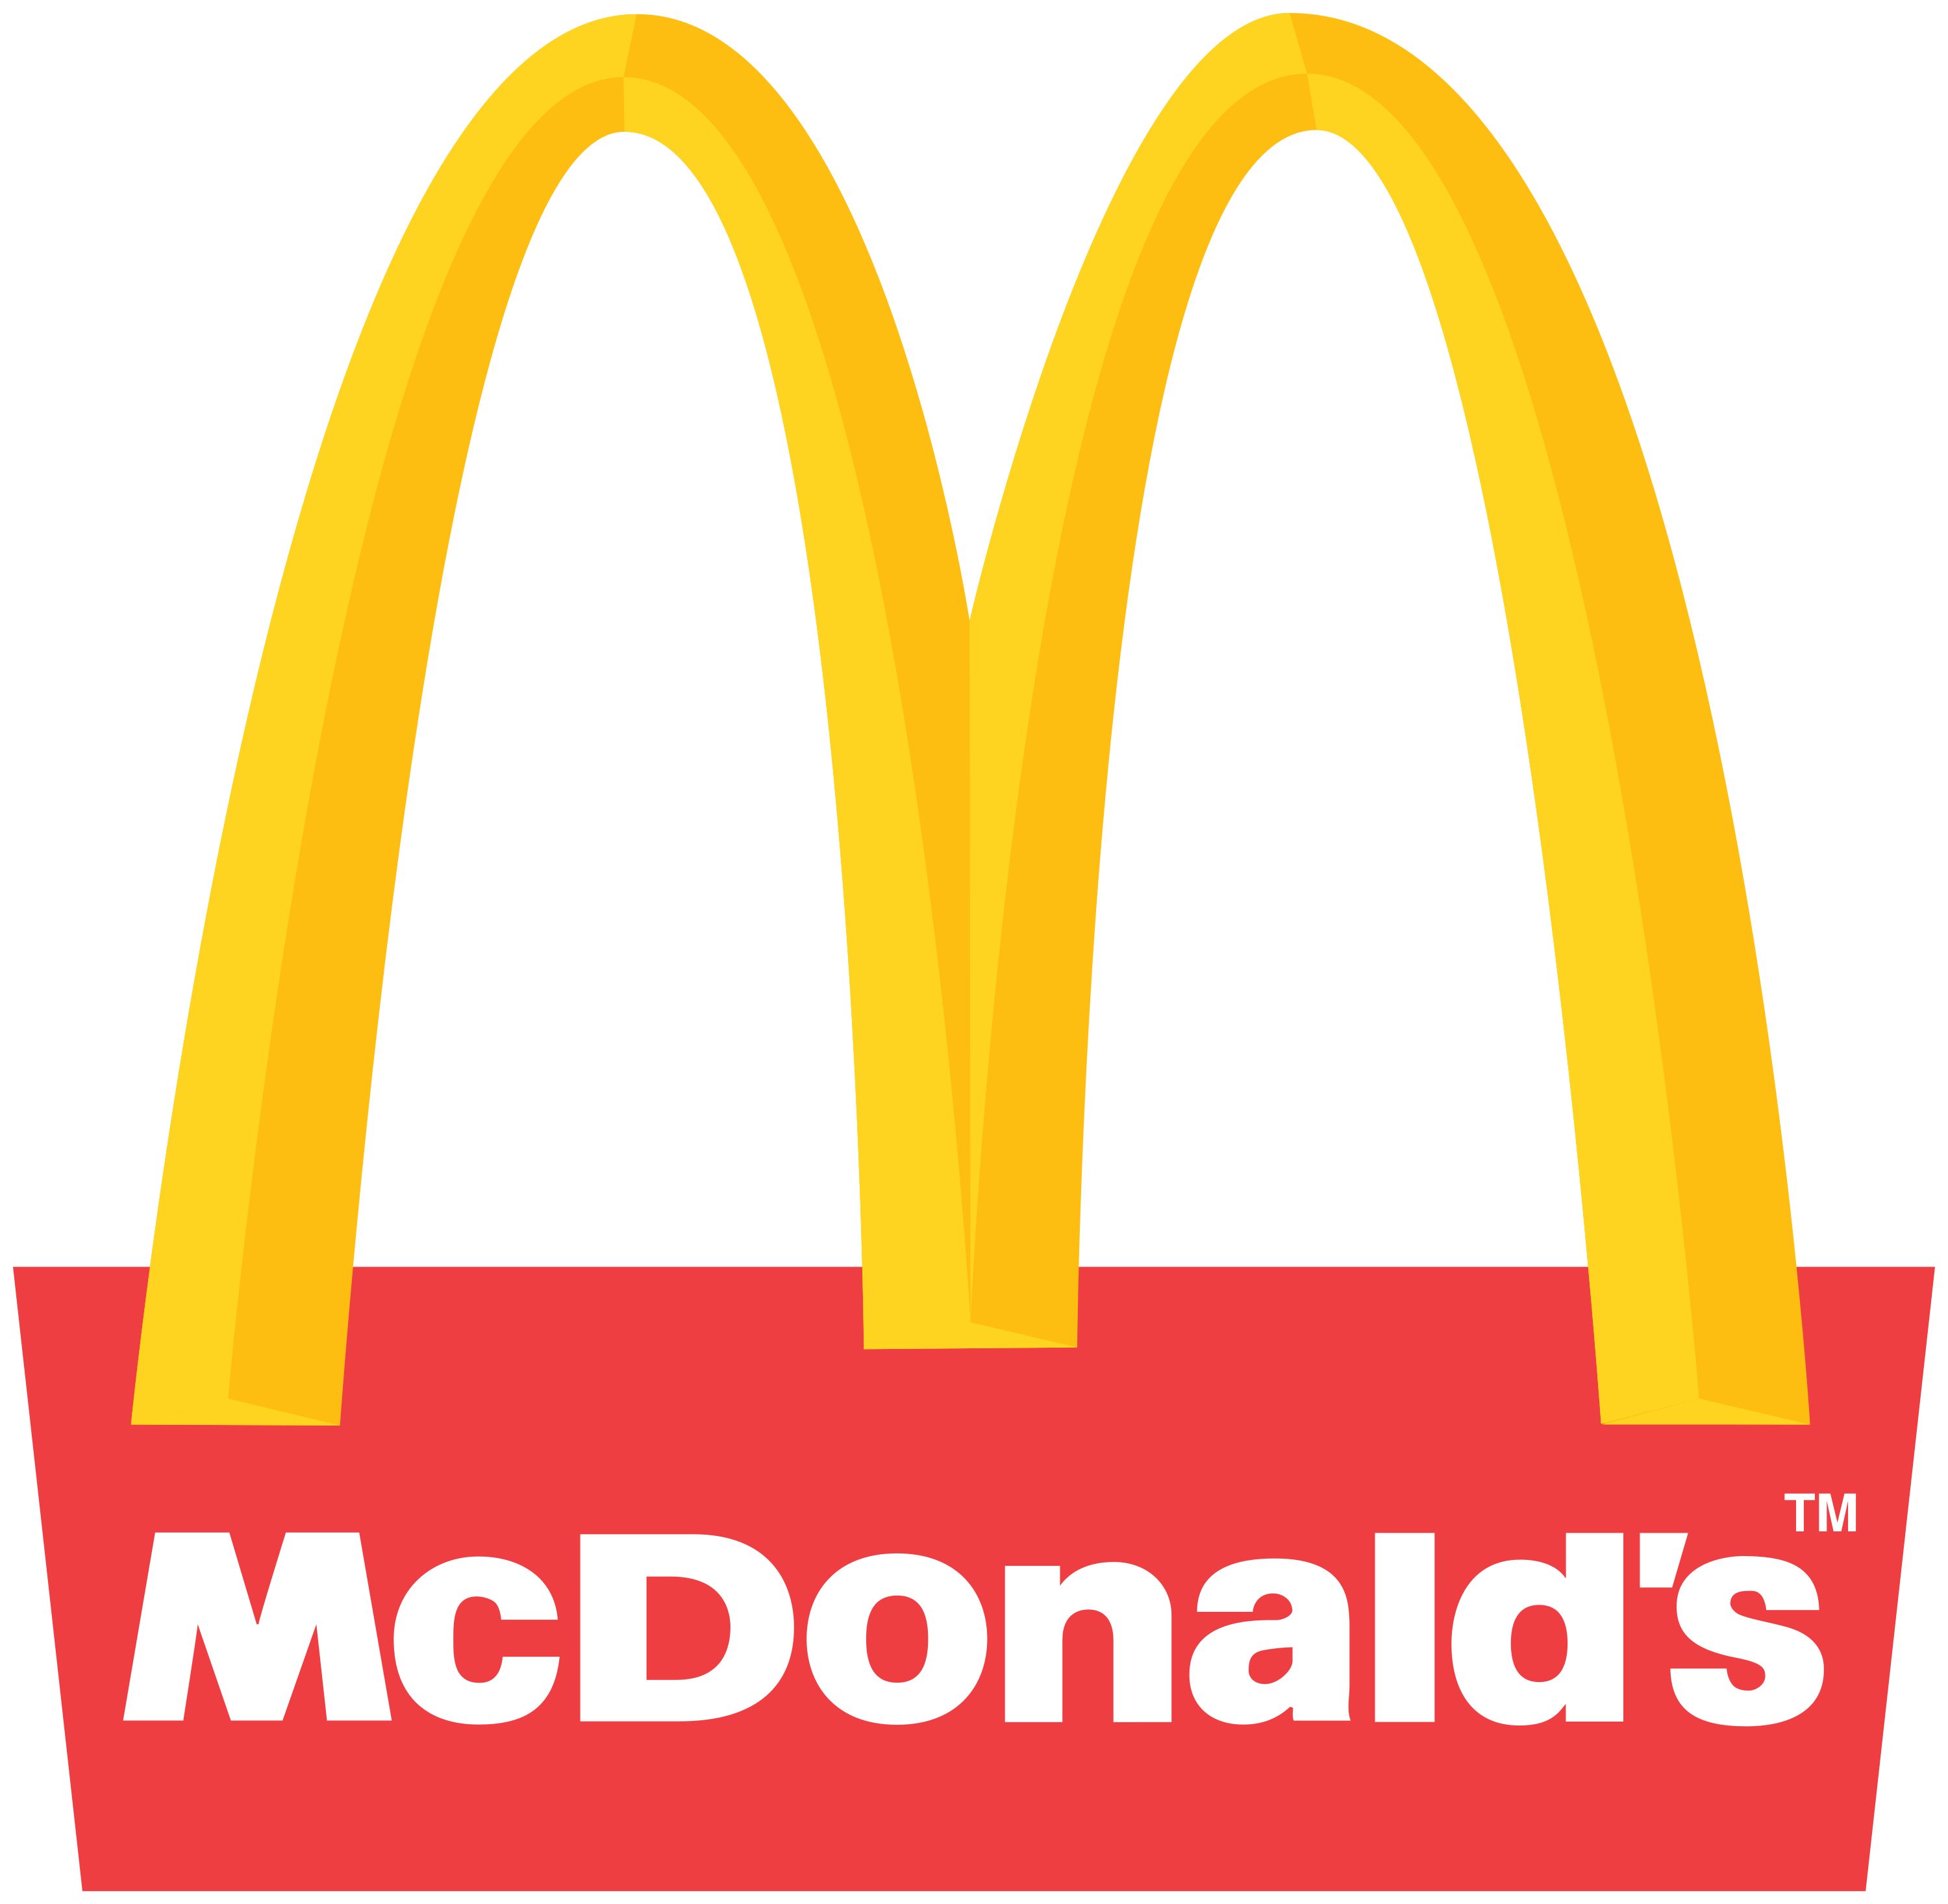 MCD Logo - McDonald's logo PNG images free download